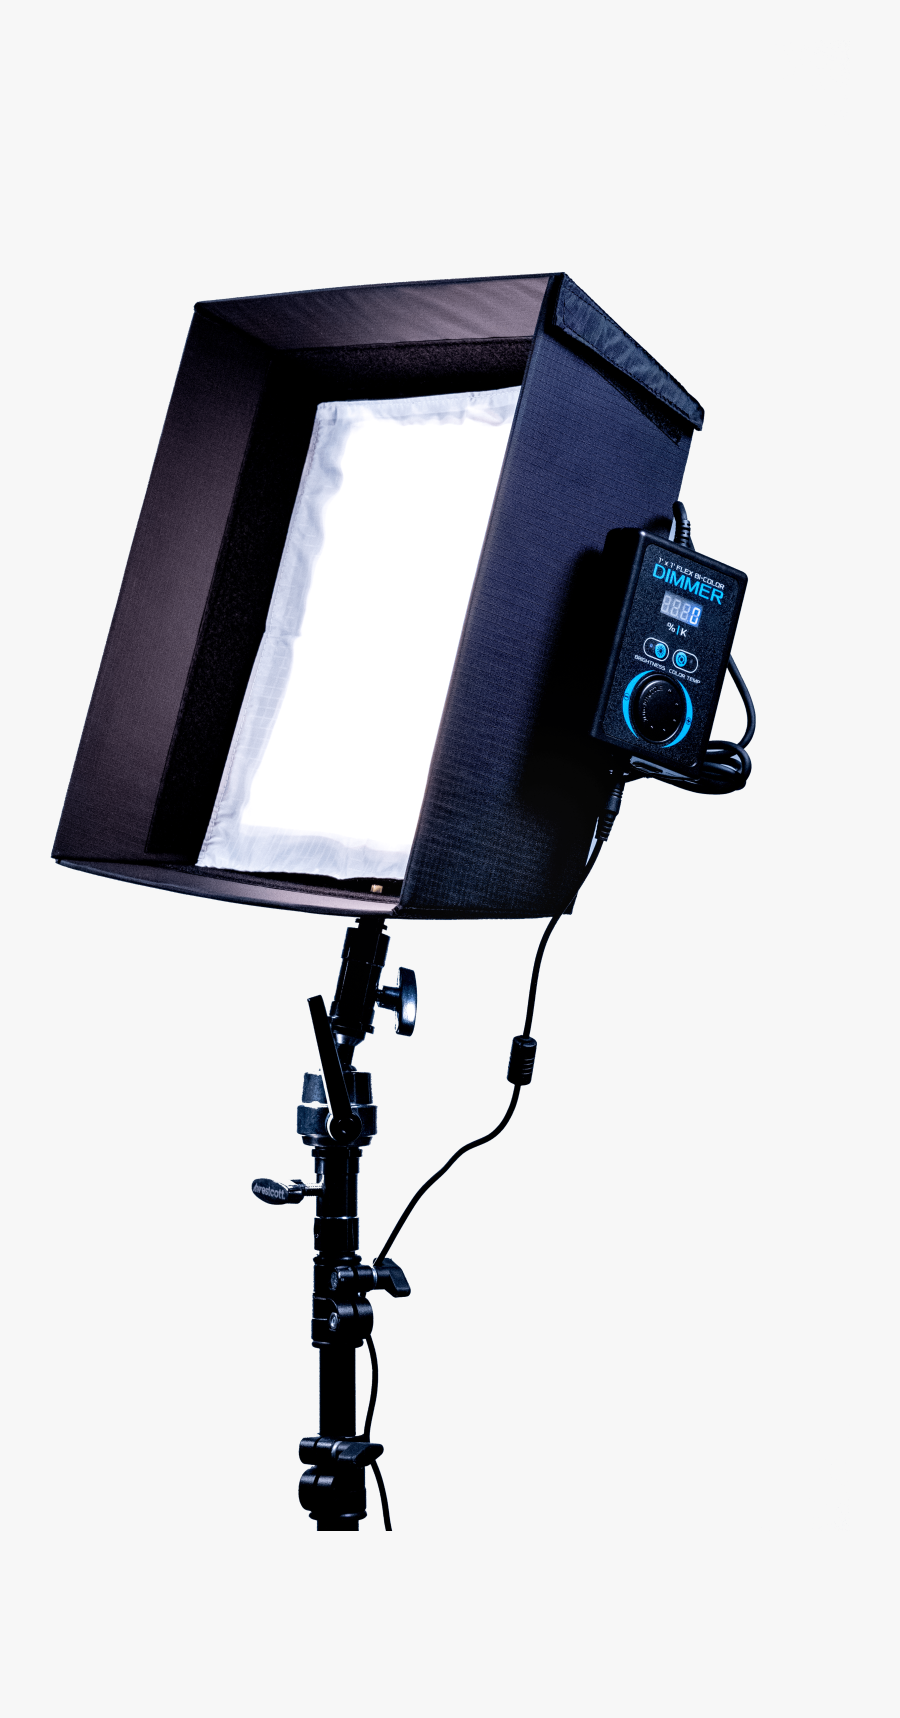 Modern Street Light Png - Lampshade, Transparent Clipart